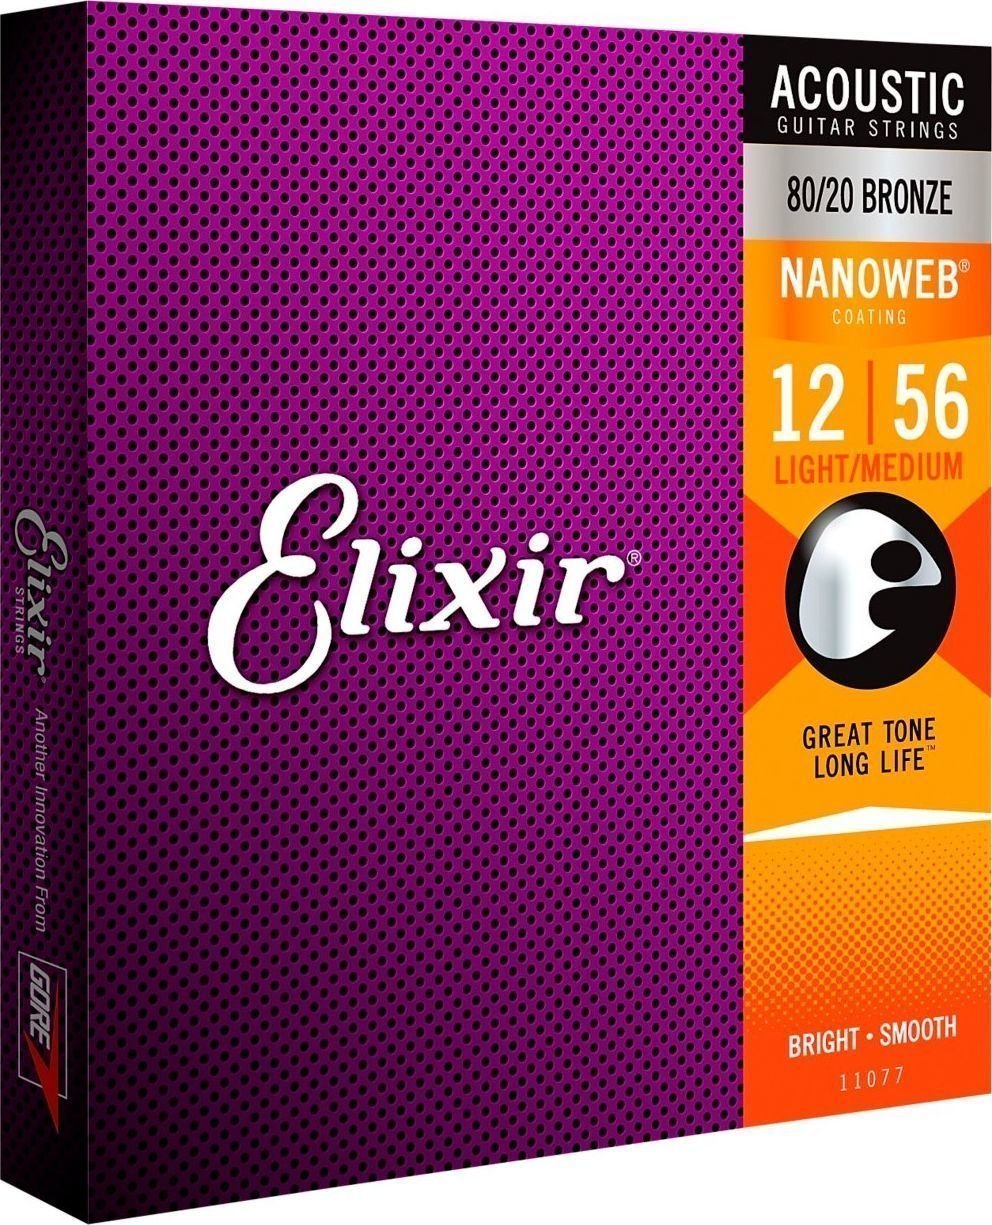 Saiten für Akustikgitarre Elixir 11077 Nanoweb 12-56